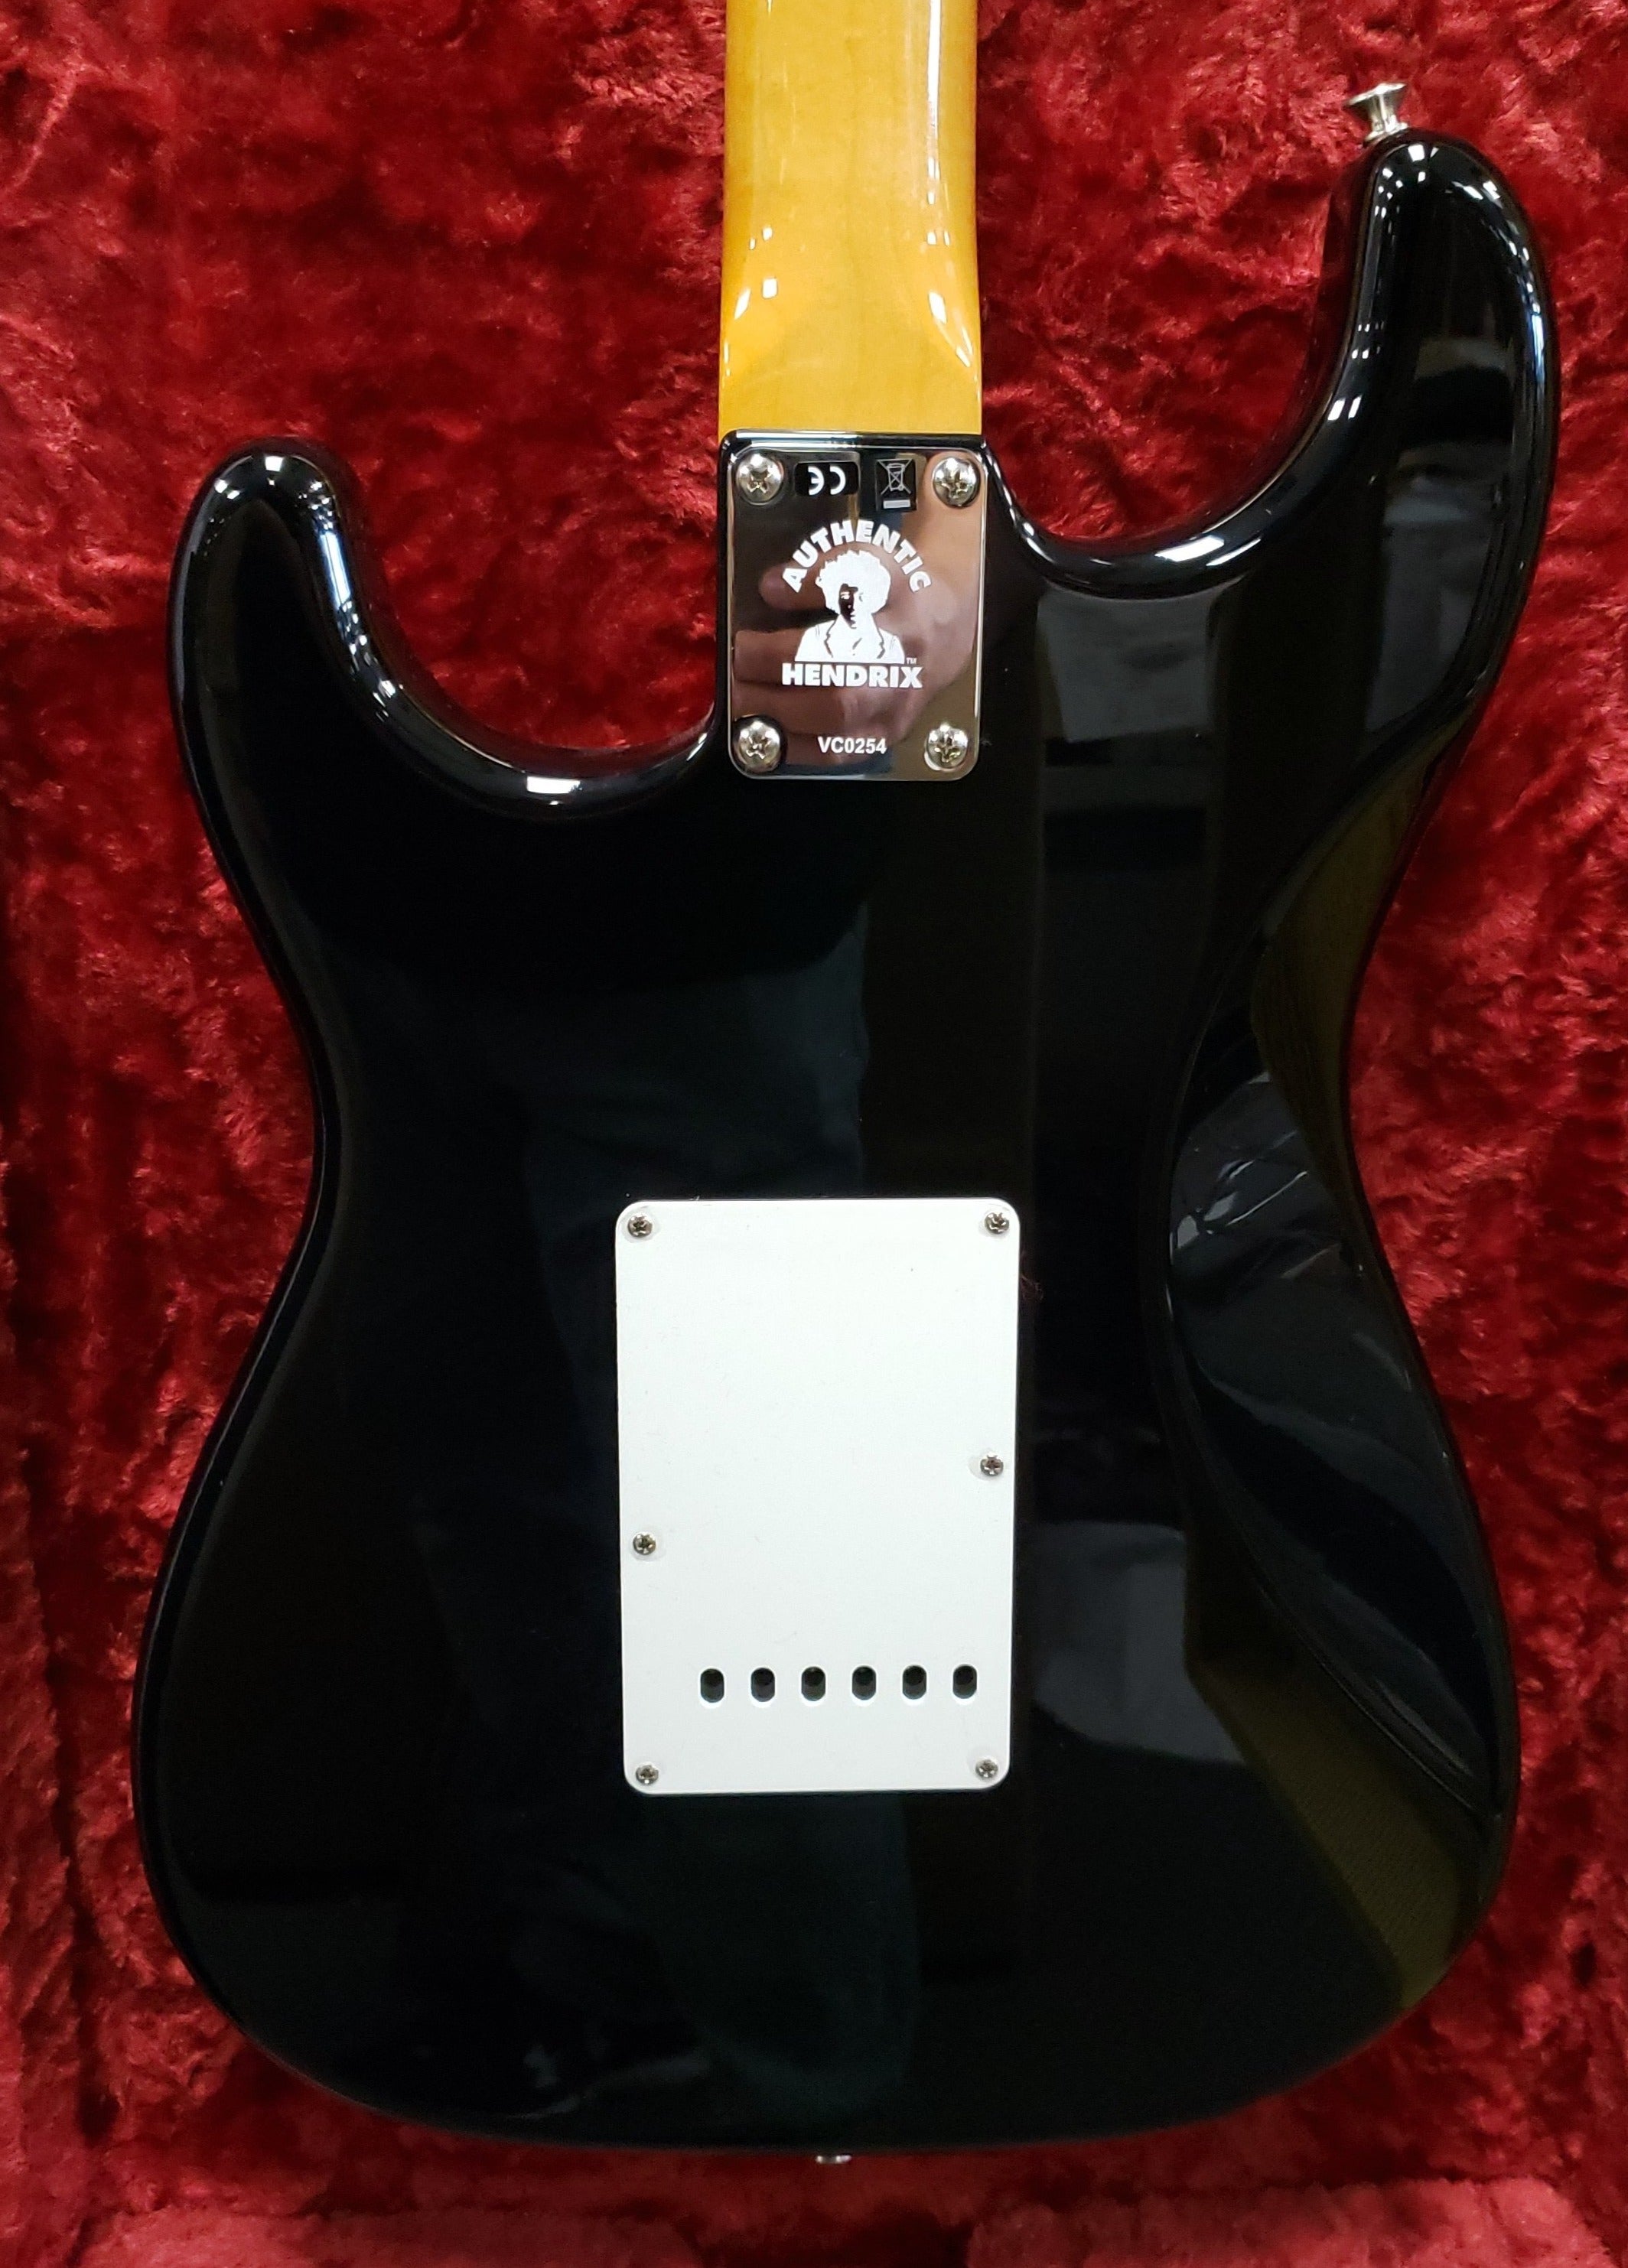 Fender Custom Shop Jimi Hendrix Voodoo Child Signature Stratocaster NOS Maple Fingerboard Black 1511272806